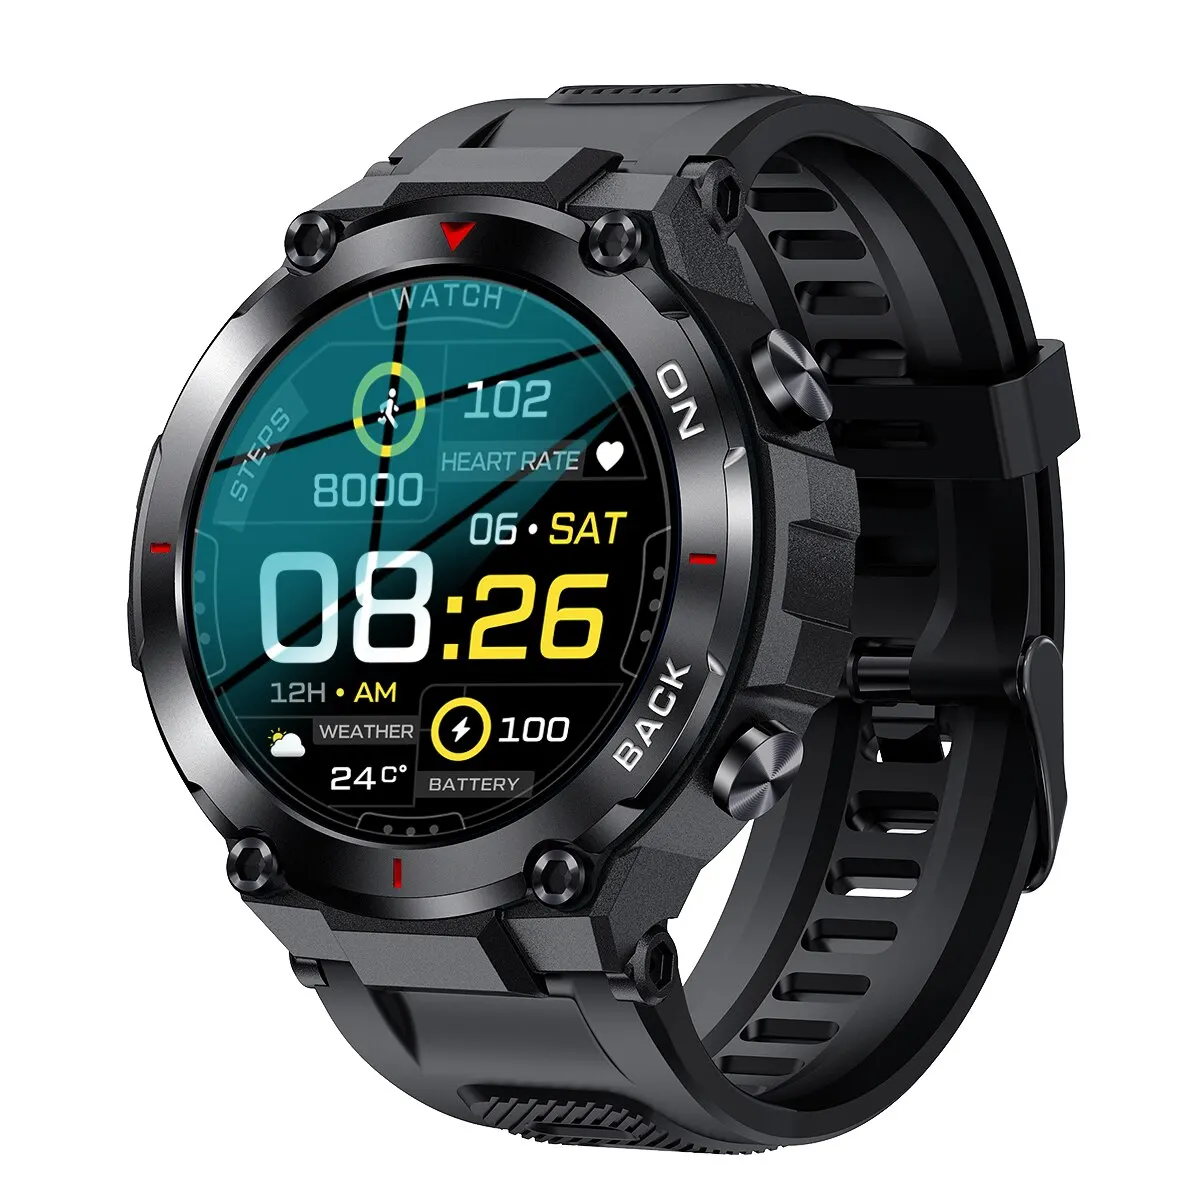 Outdoor Military GPS Smart Watch Men 360*360 HD Screen Heart Rate IP68 W... - $149.14